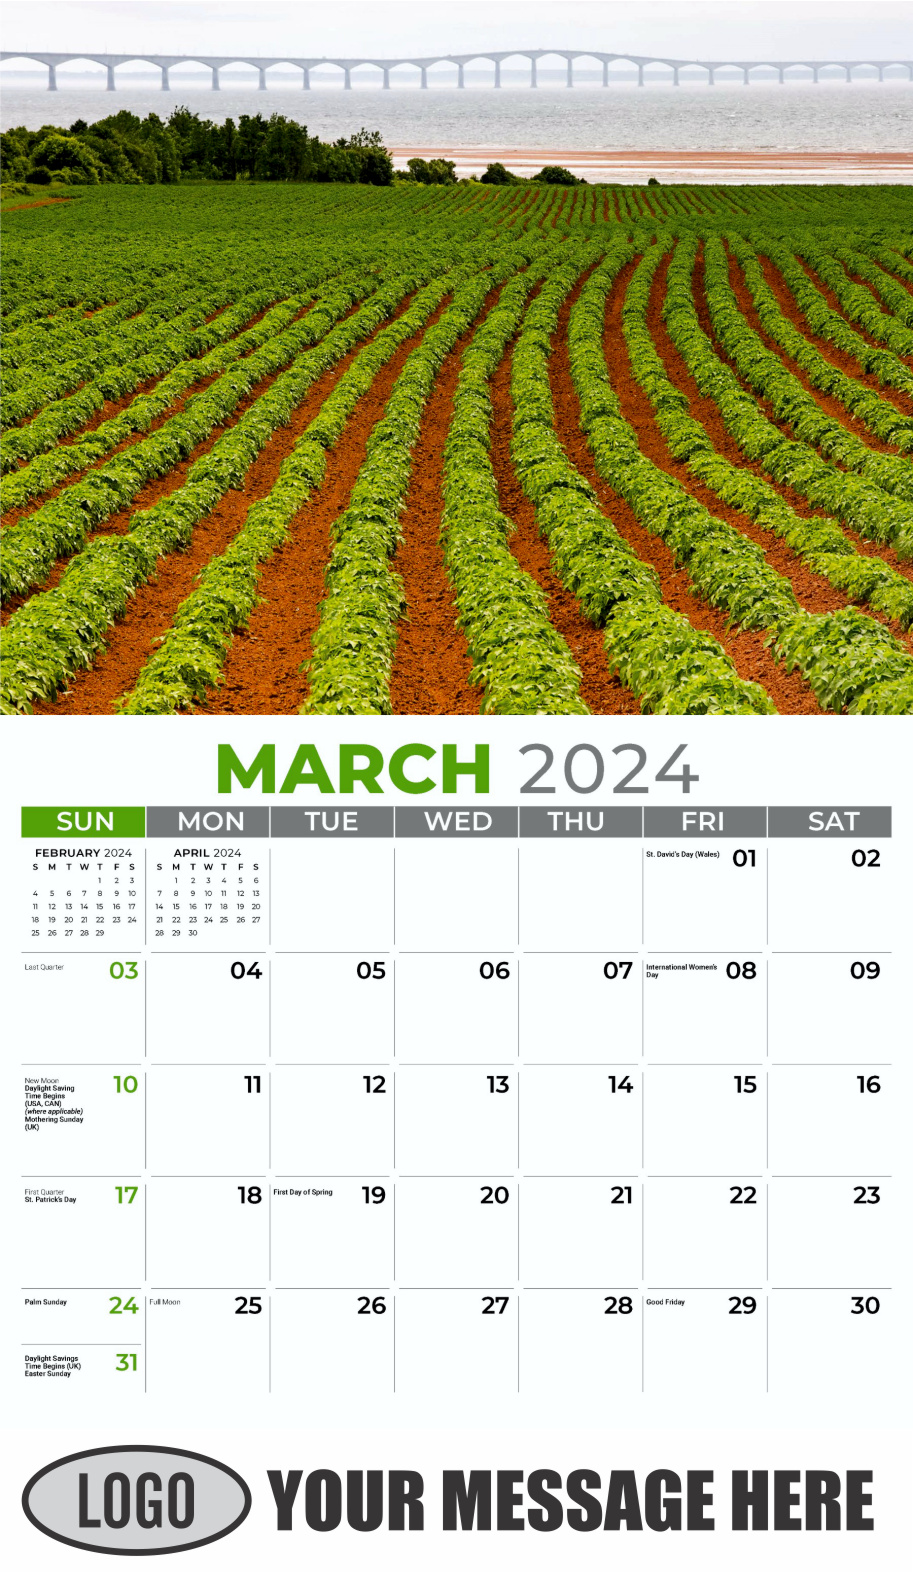 Country Spirit 2024 Business Advertising Calendar - March